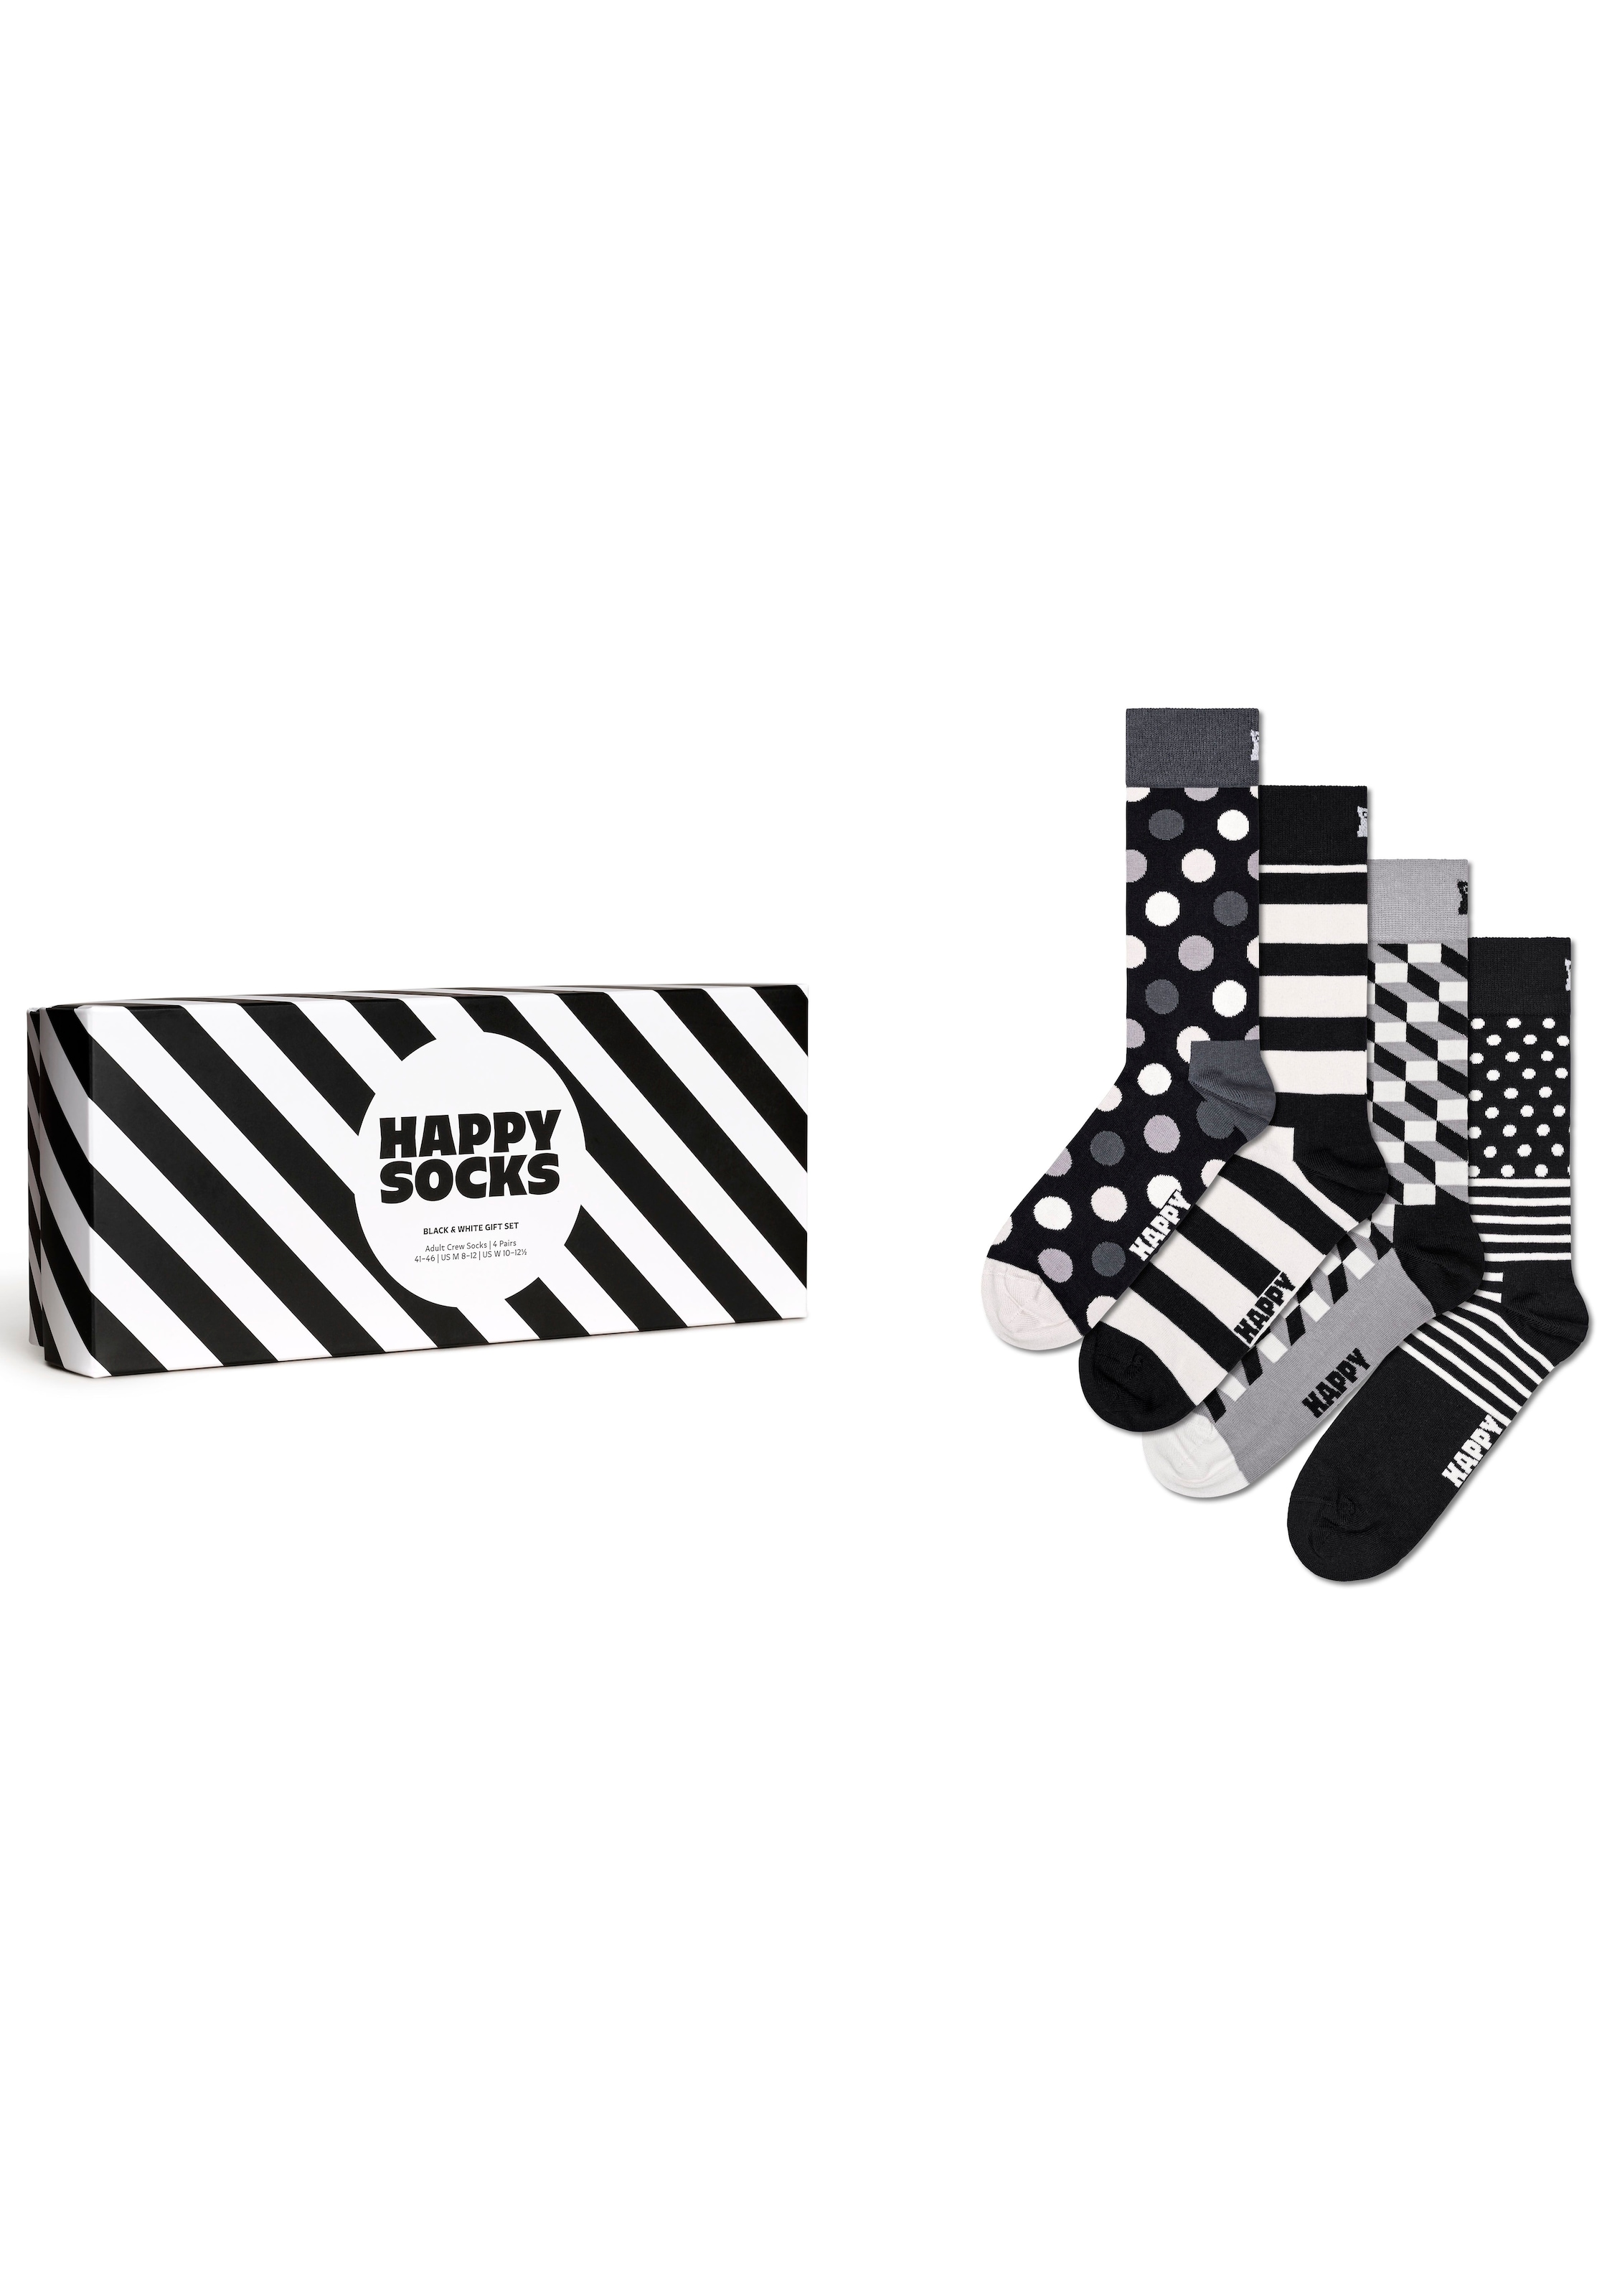 Classic & OTTO 4 Socks White Happy Set Socken, bei Paar), Black Gift kaufen (Packung, Socks